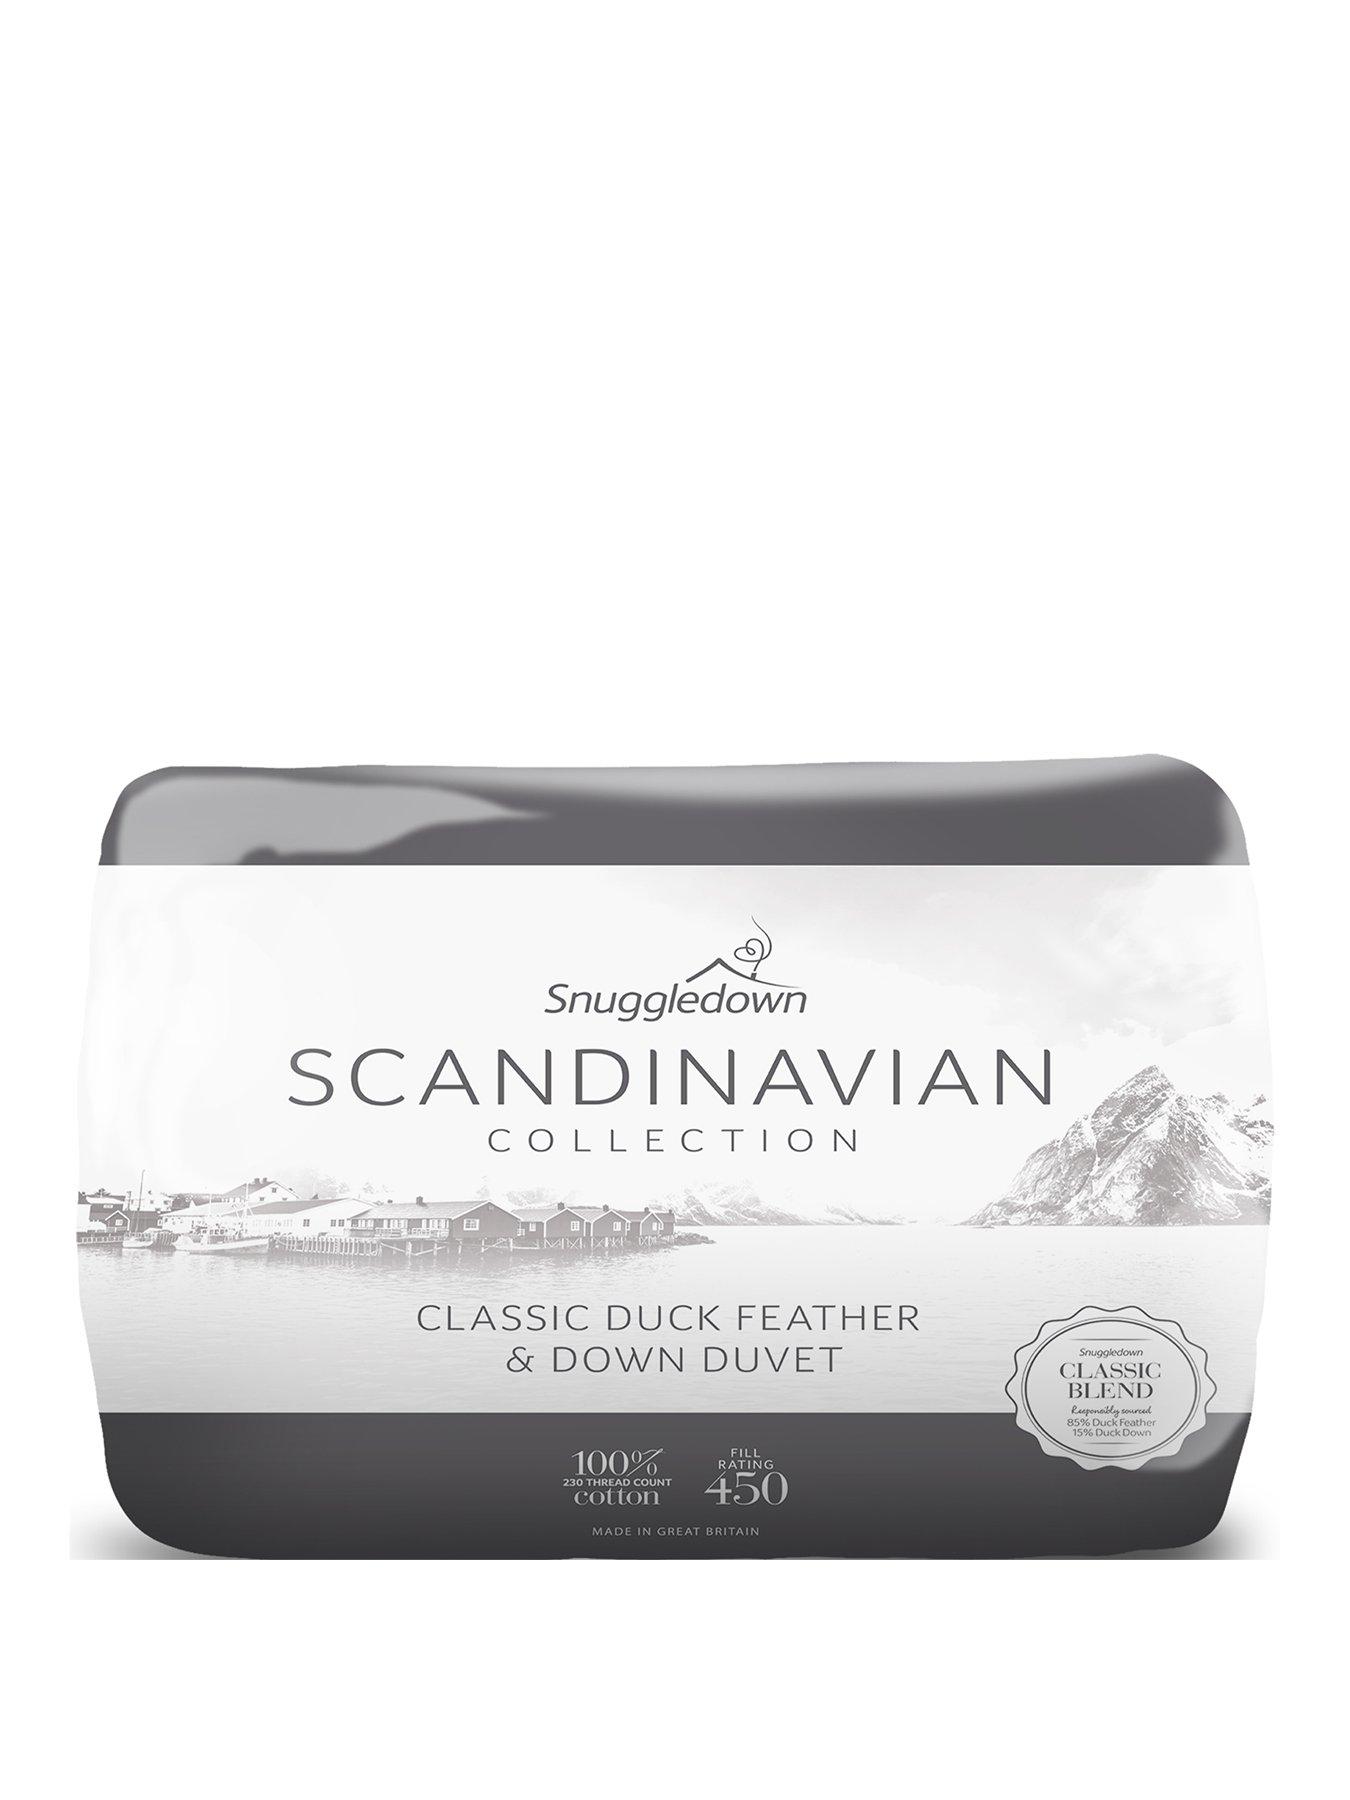 Snuggledown Scandinavian Classic Duck Feather And Down Duvet 13 5